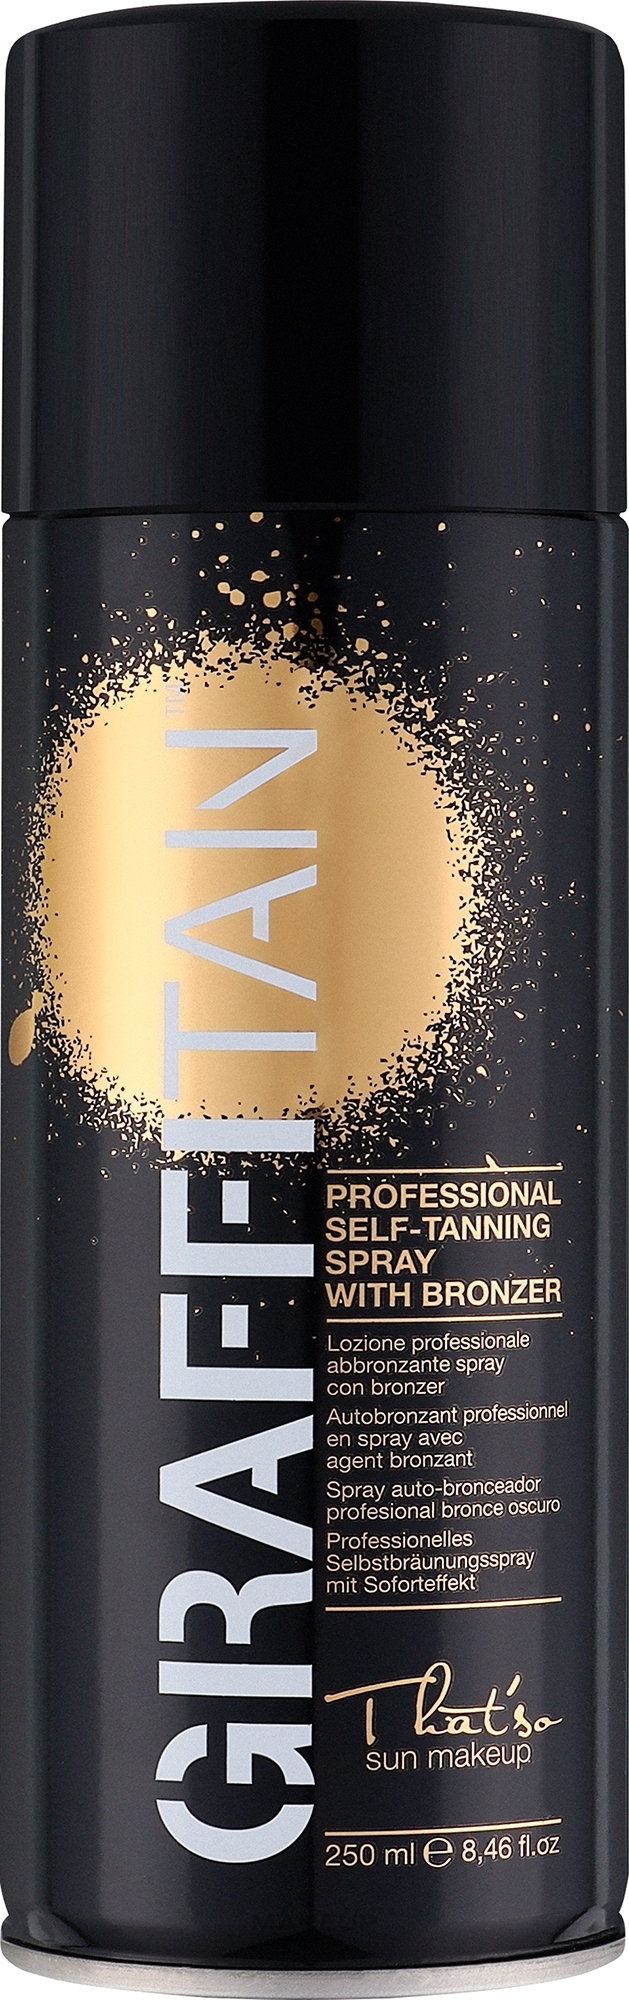 Професійний спрей-автозасмага з бронзатором - That'So Graffitan Professional Self-Tanning Spray With Bronzer — фото 250ml